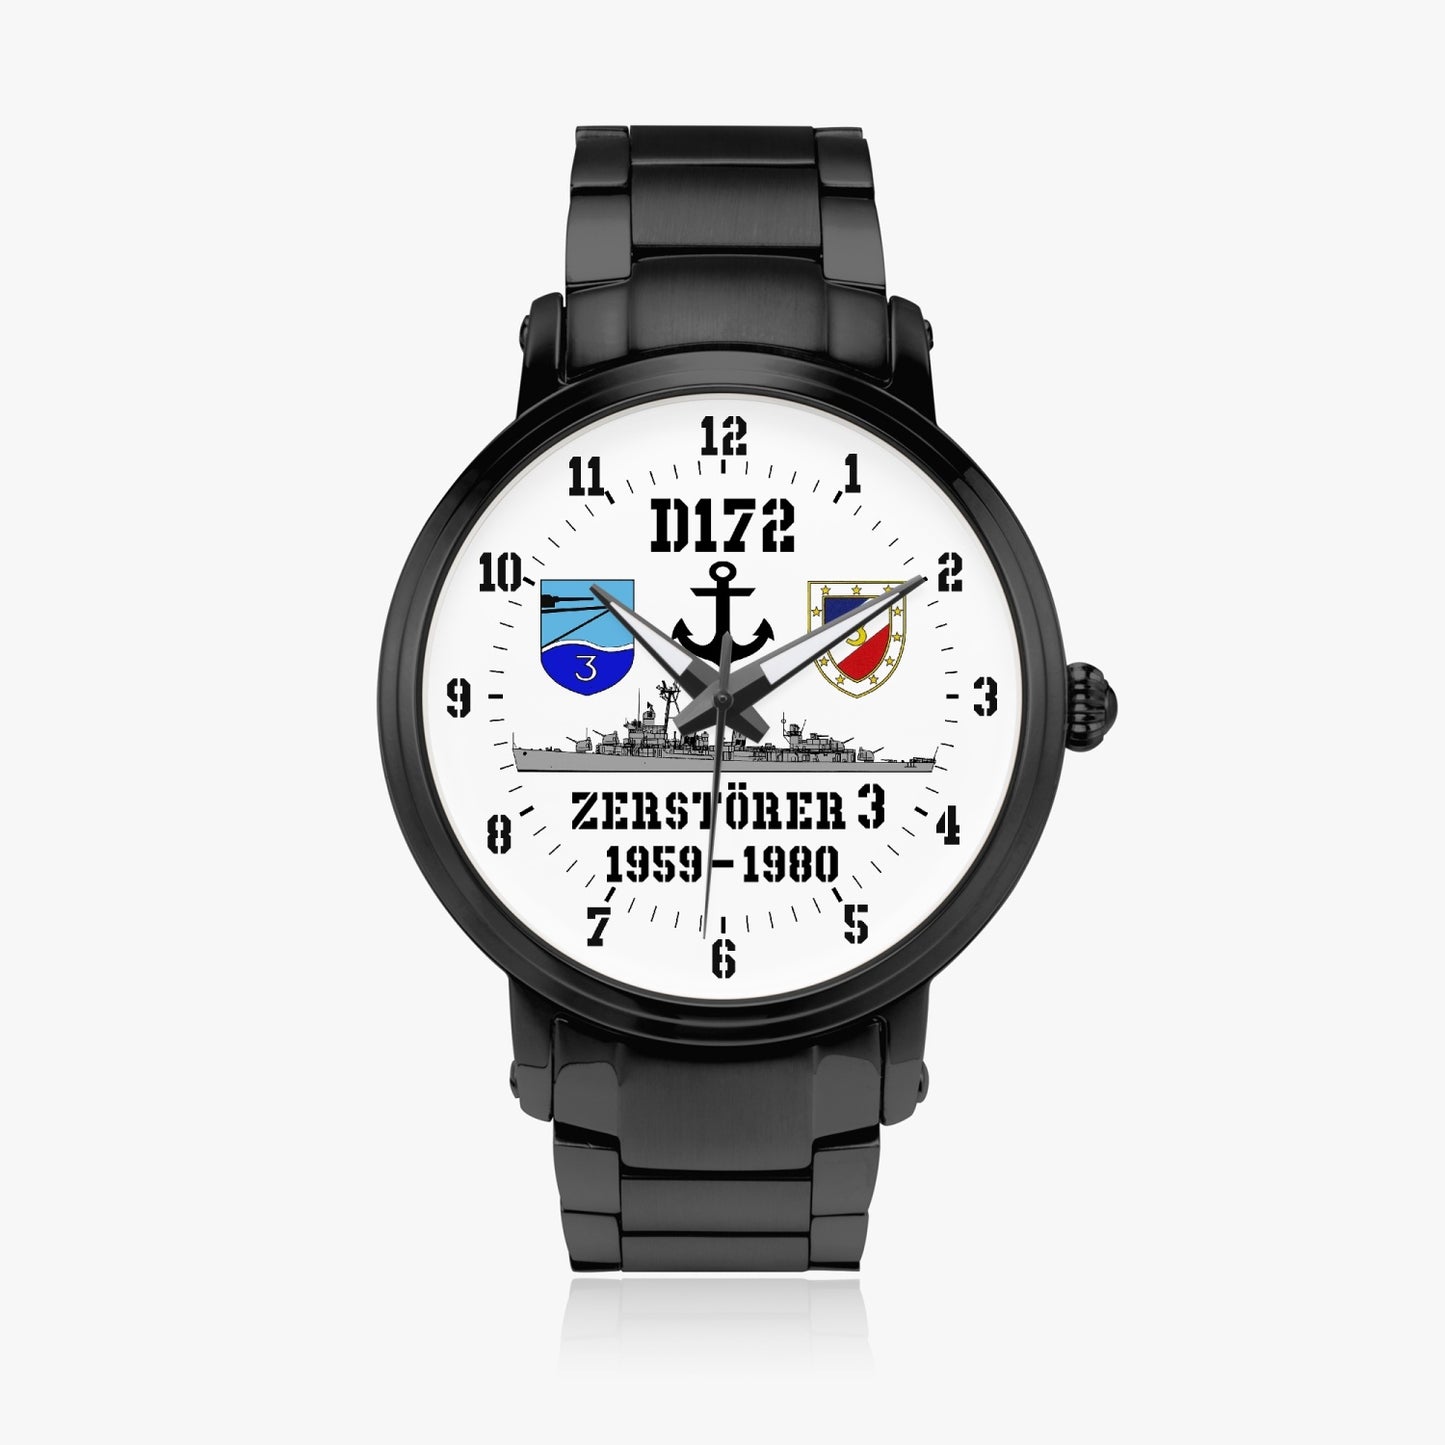 Armbanduhr D172 ZERSTÖRER 3 - Automatik